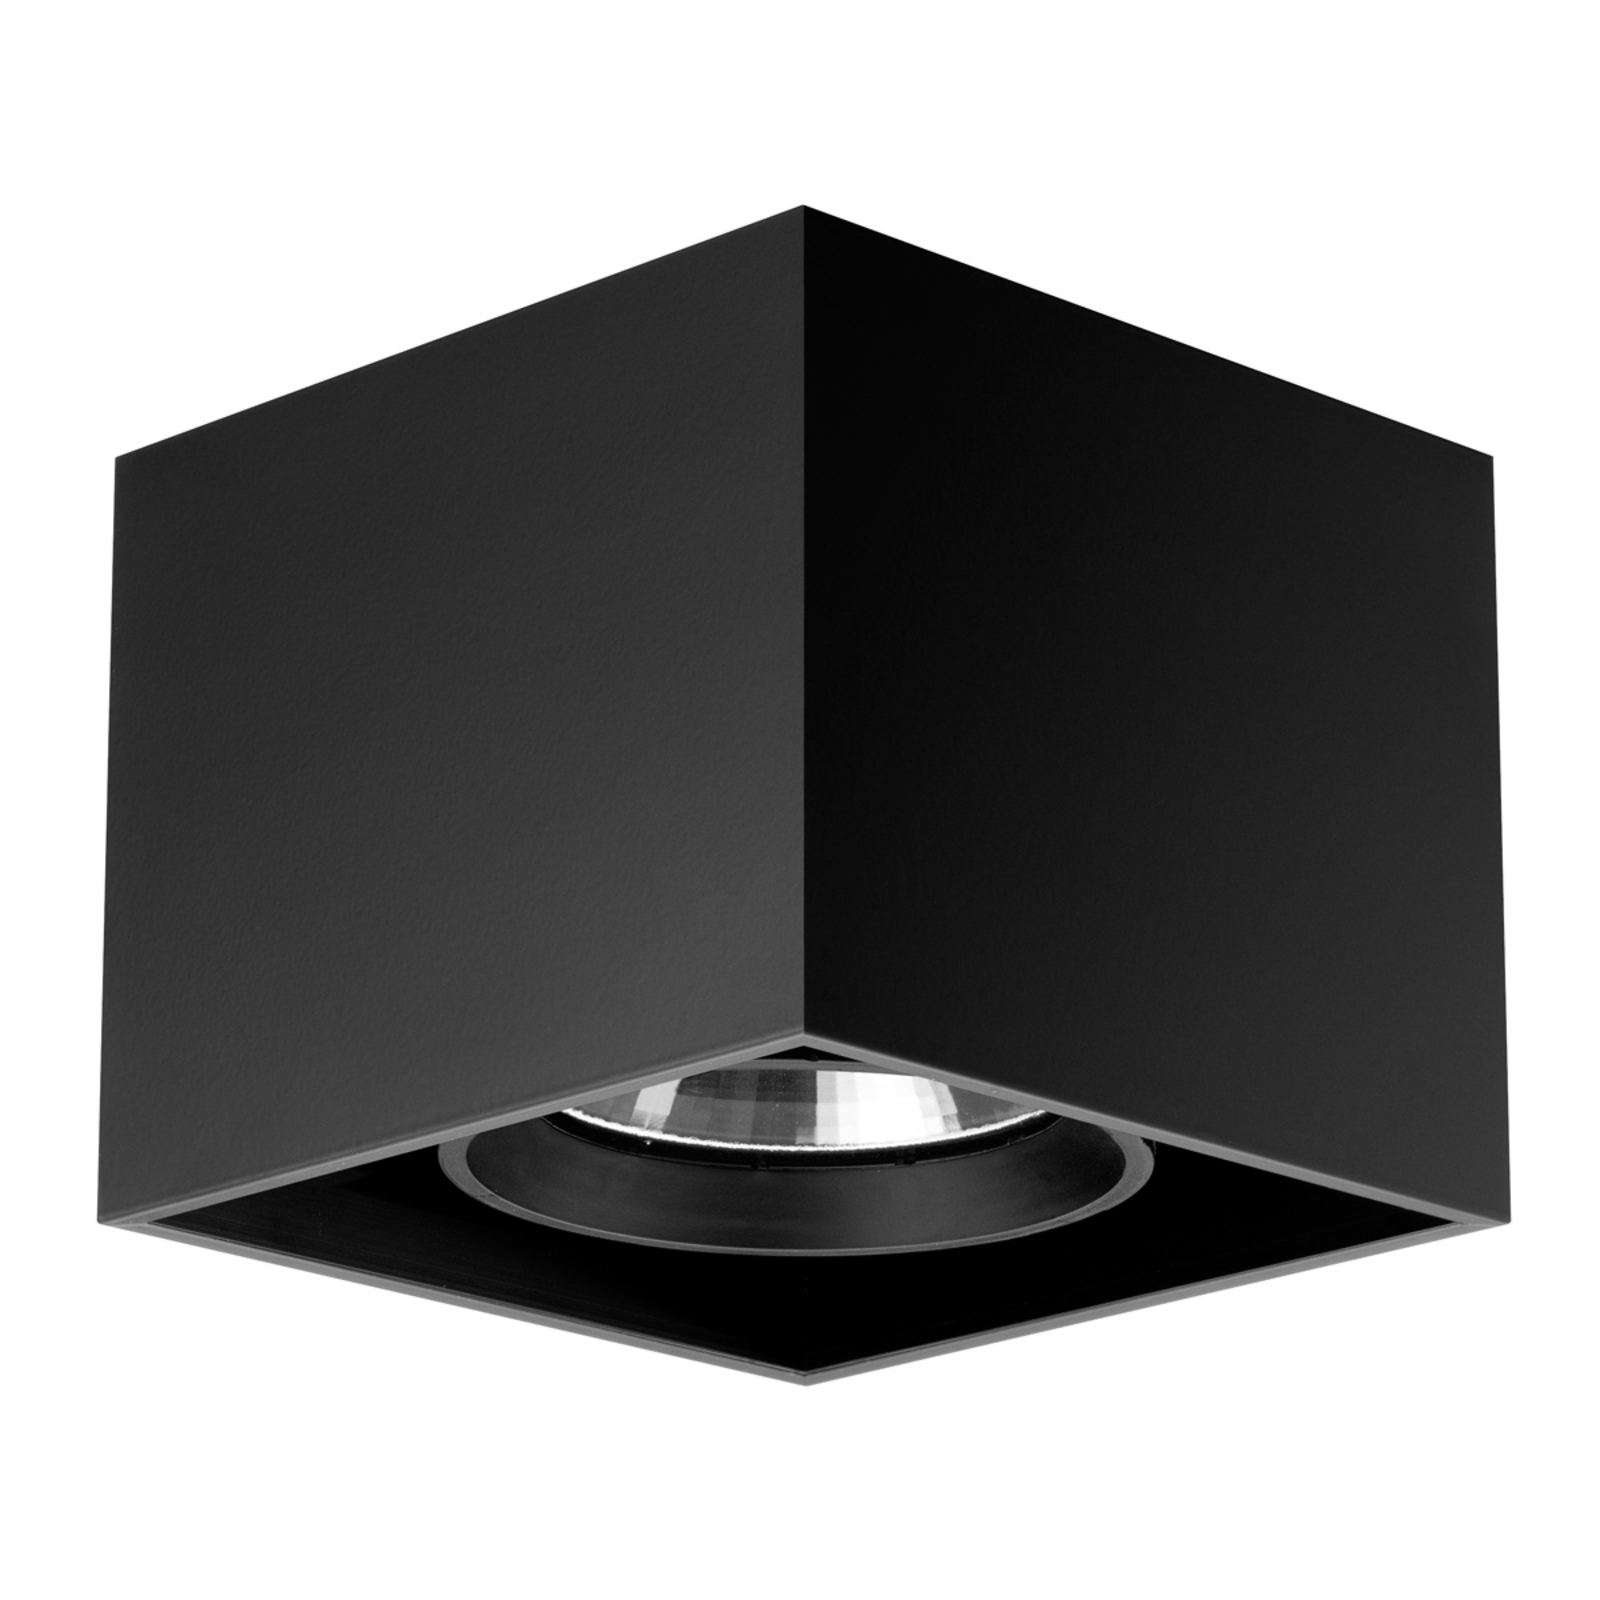 Kwadratowa lampa sufitowa Compass Box czarna